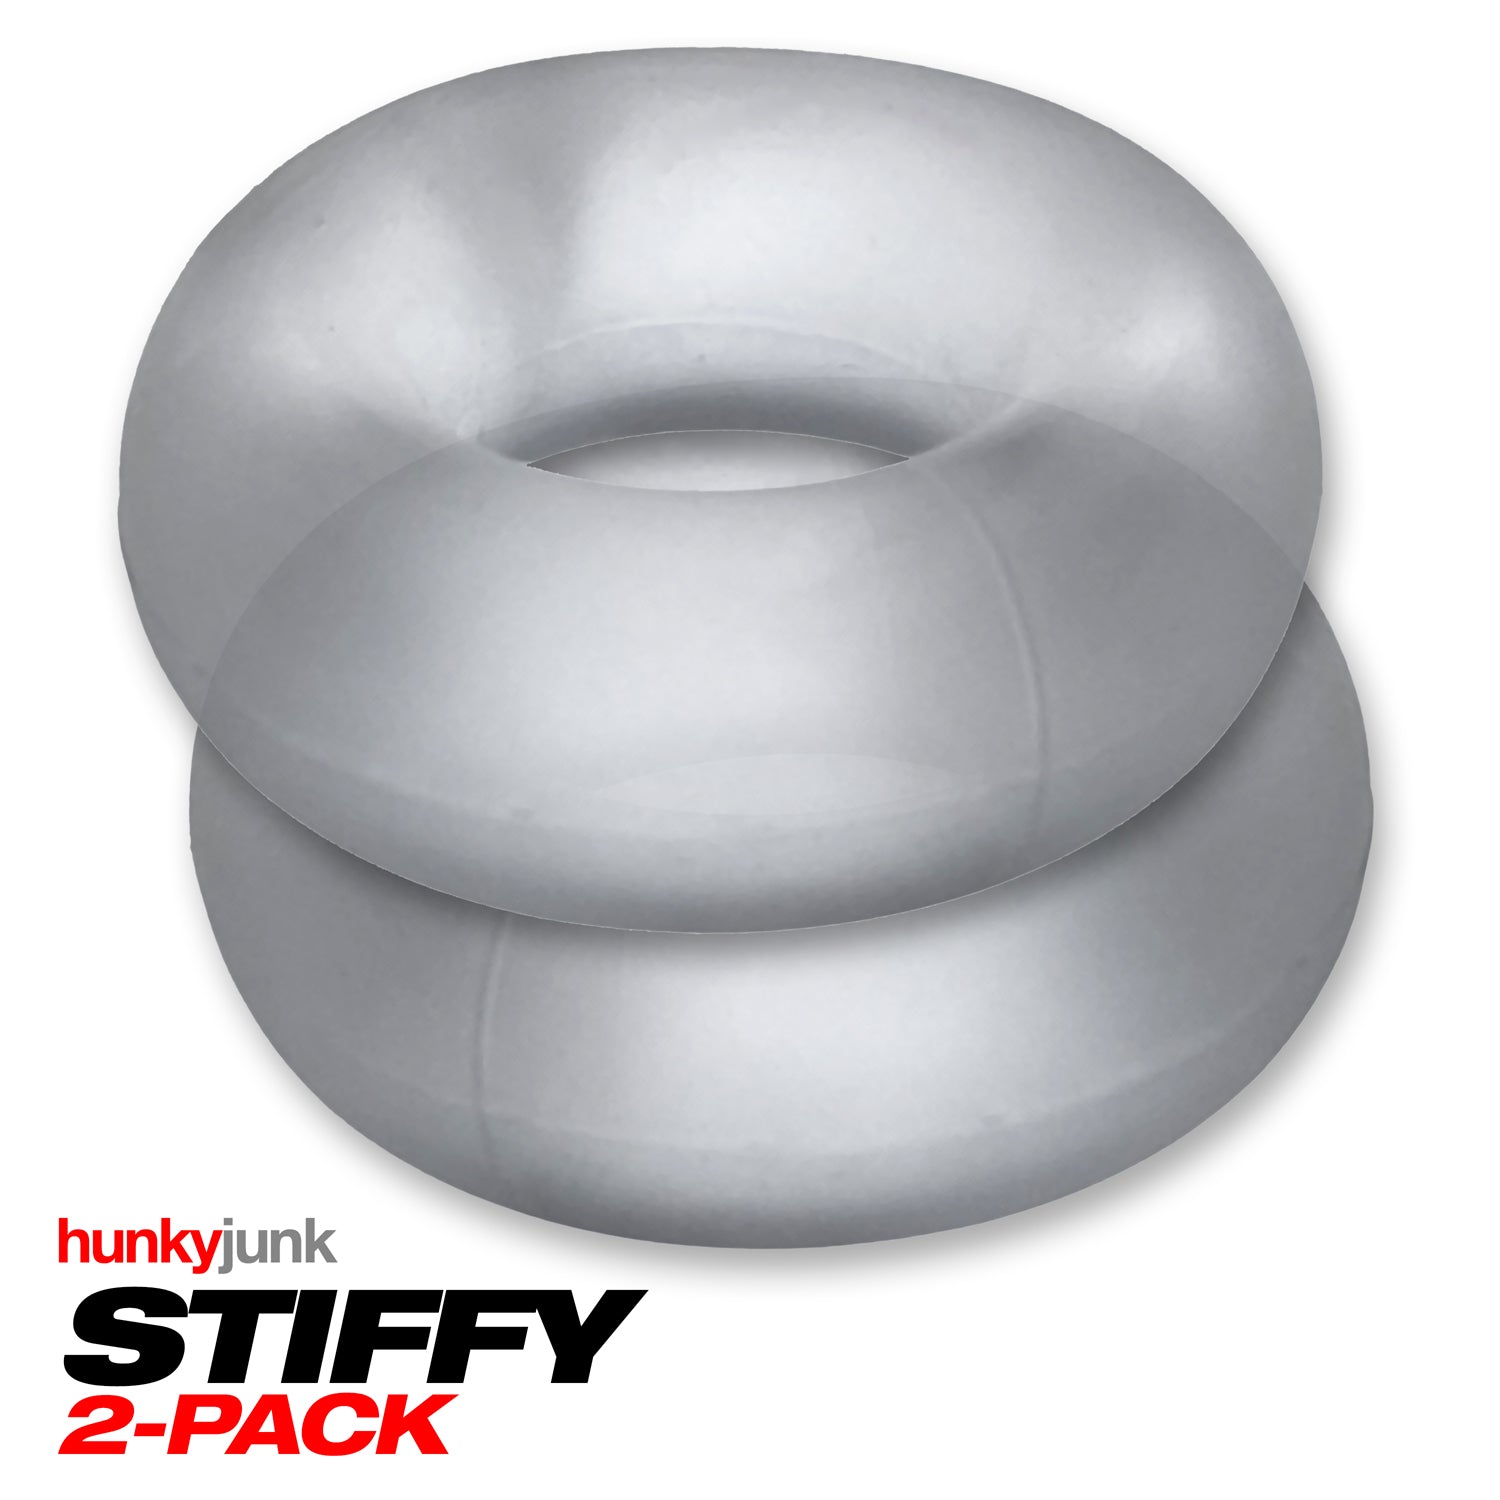 Hunkyjunk STIFFY 2-pack Bulge Cockrings